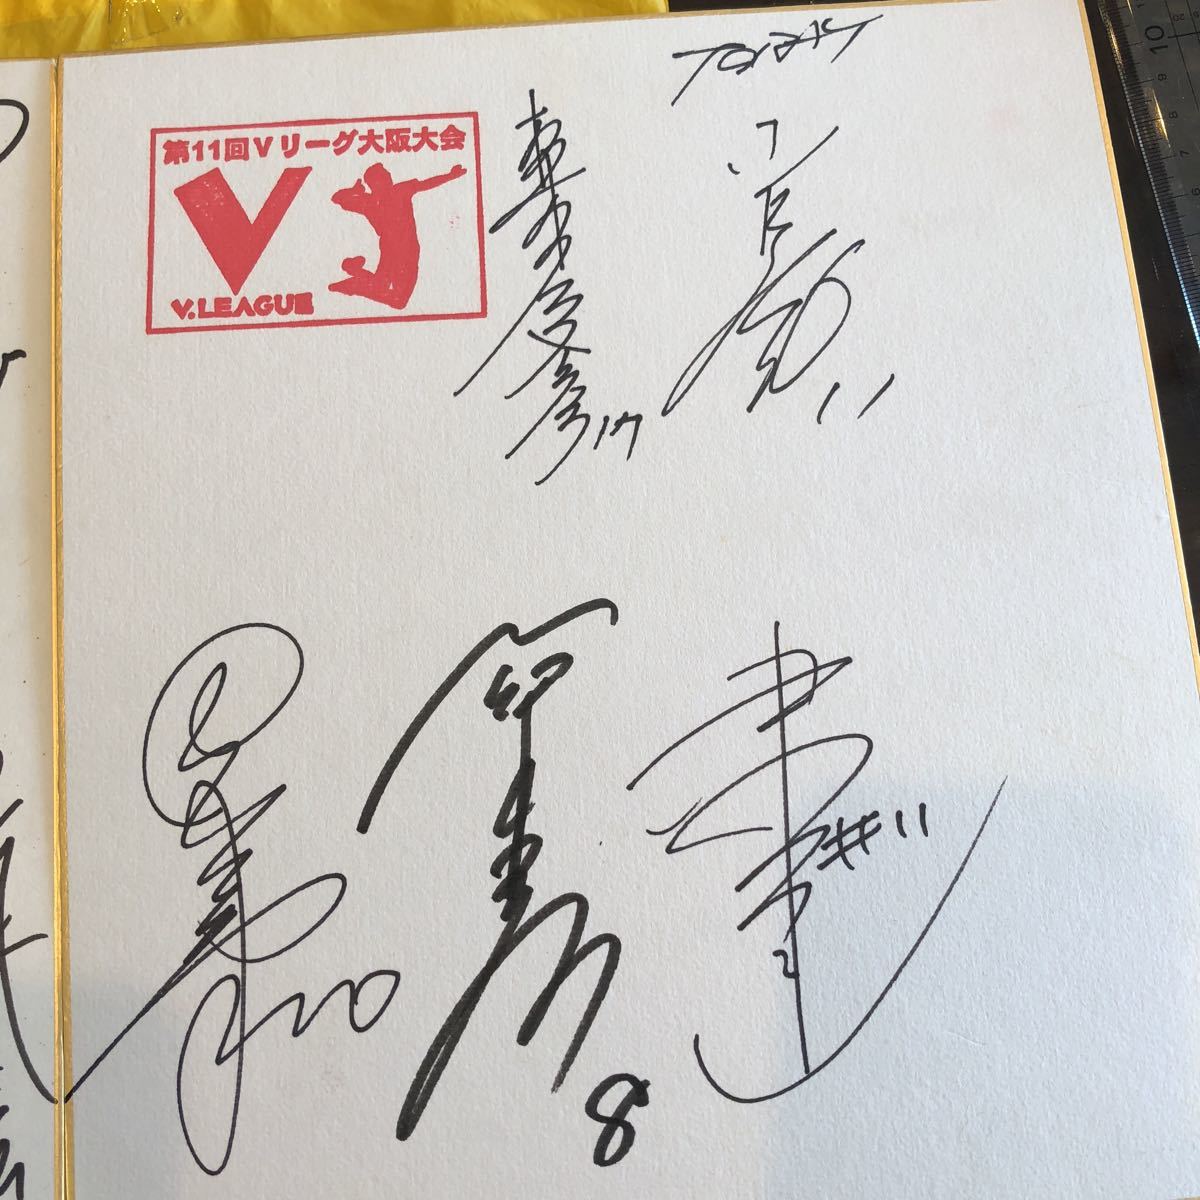  no. 11 раз V Lee g Osaka собрание автограф автограф волейбол MOBARA ALUKAS 2 шт. комплект 